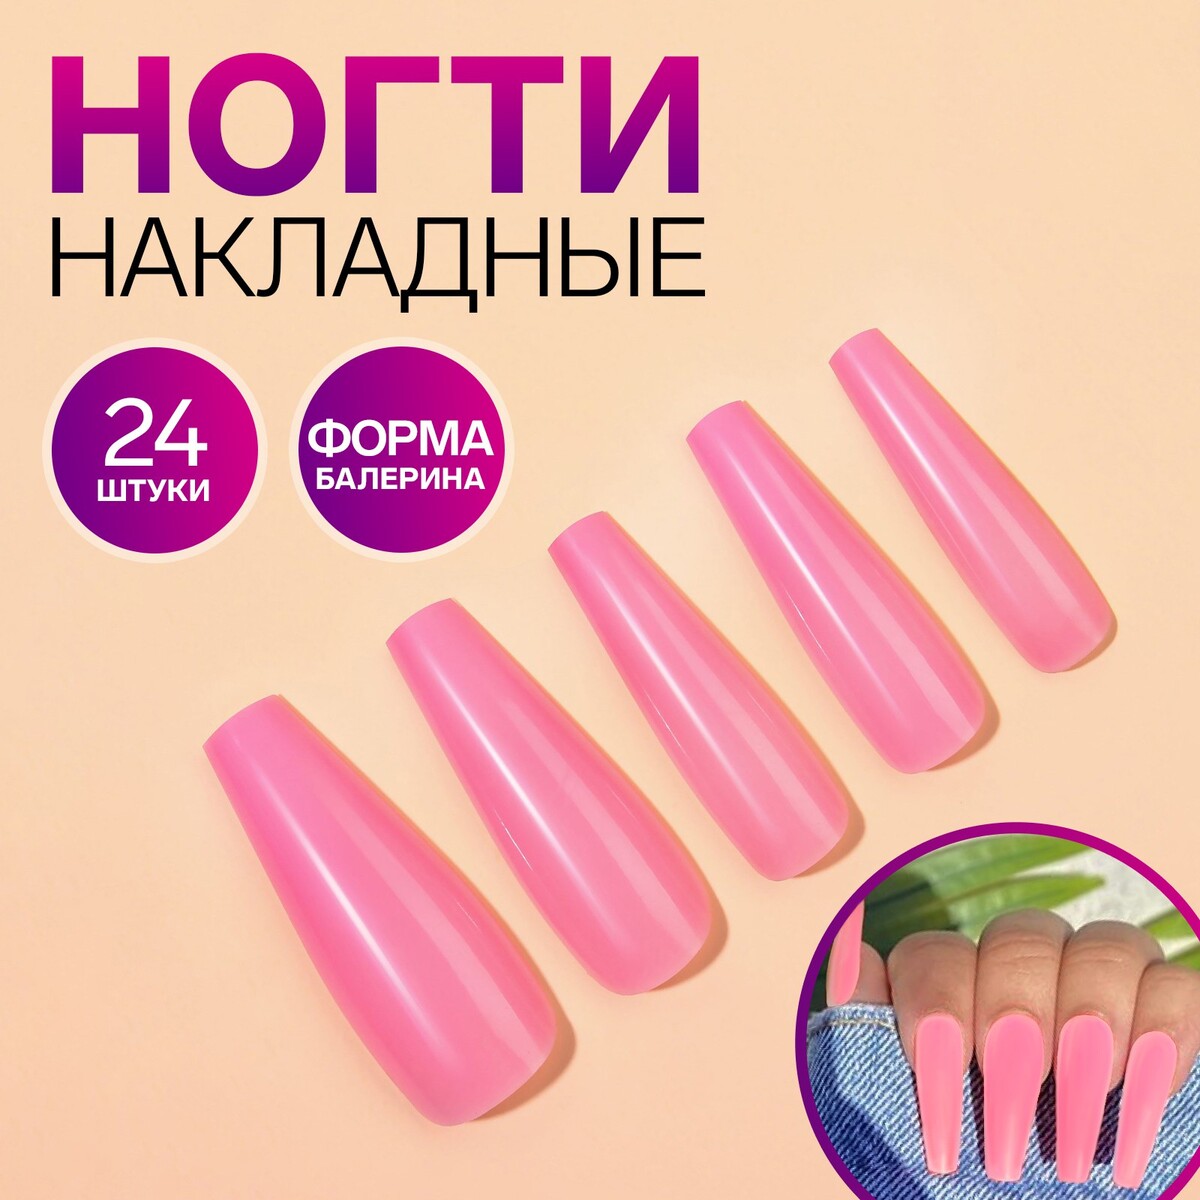 Накладные ногти, 24 шт, форма балерина, цвет нежно-розовый накладные ногти 24 шт форма балерина неоновый желтый